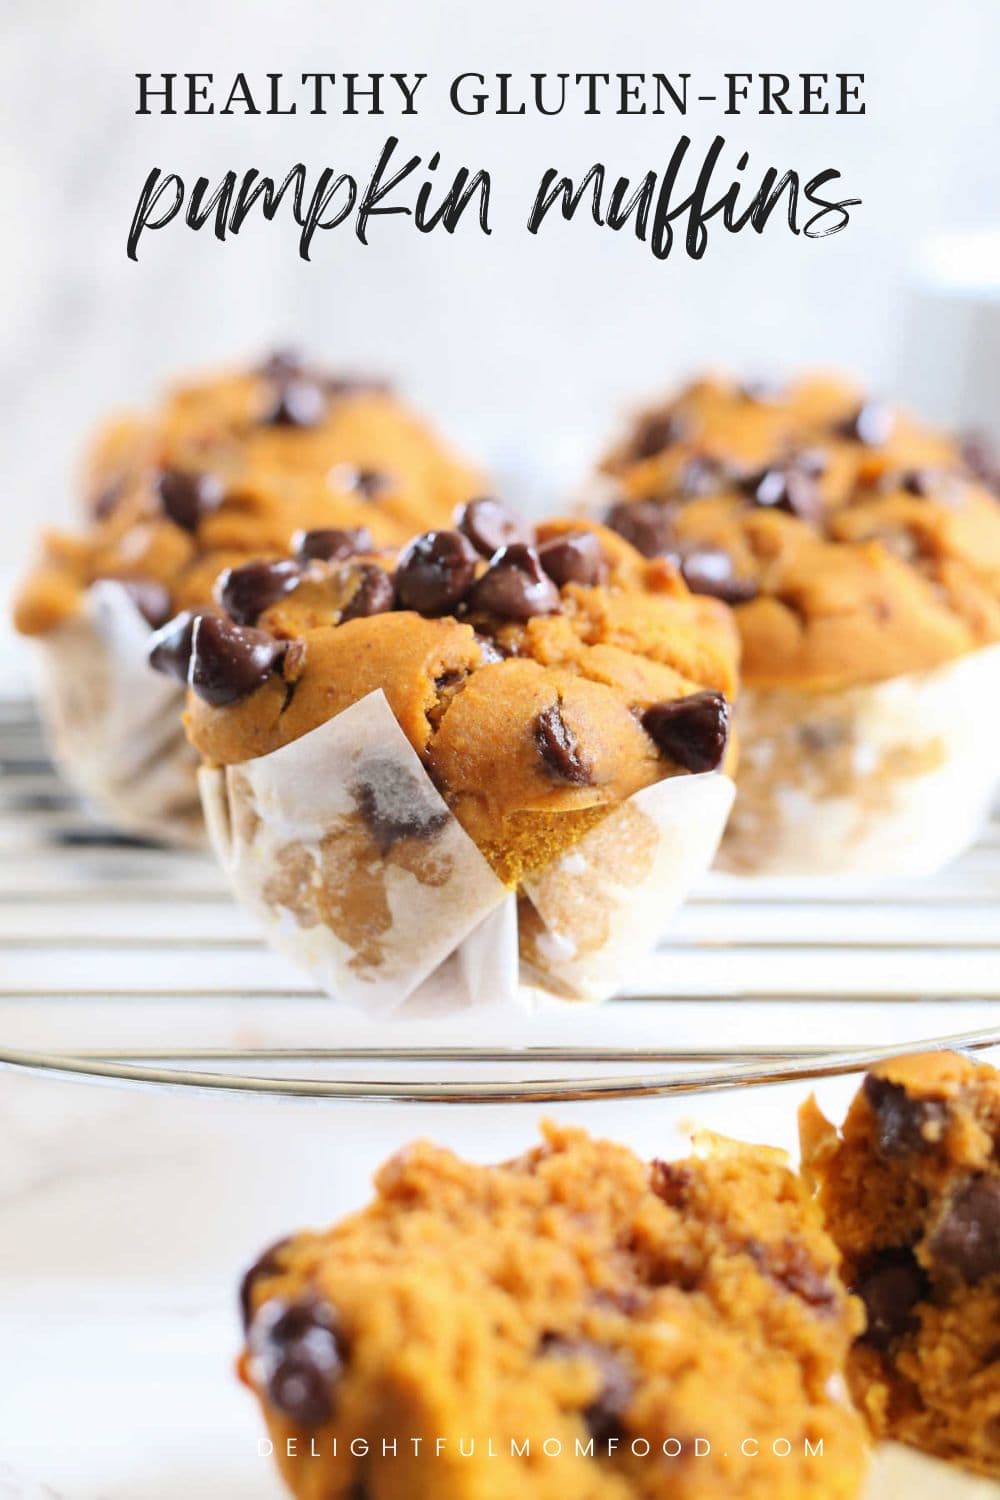 healthy gluten-free pumpkin chocolate chip muffin recipe